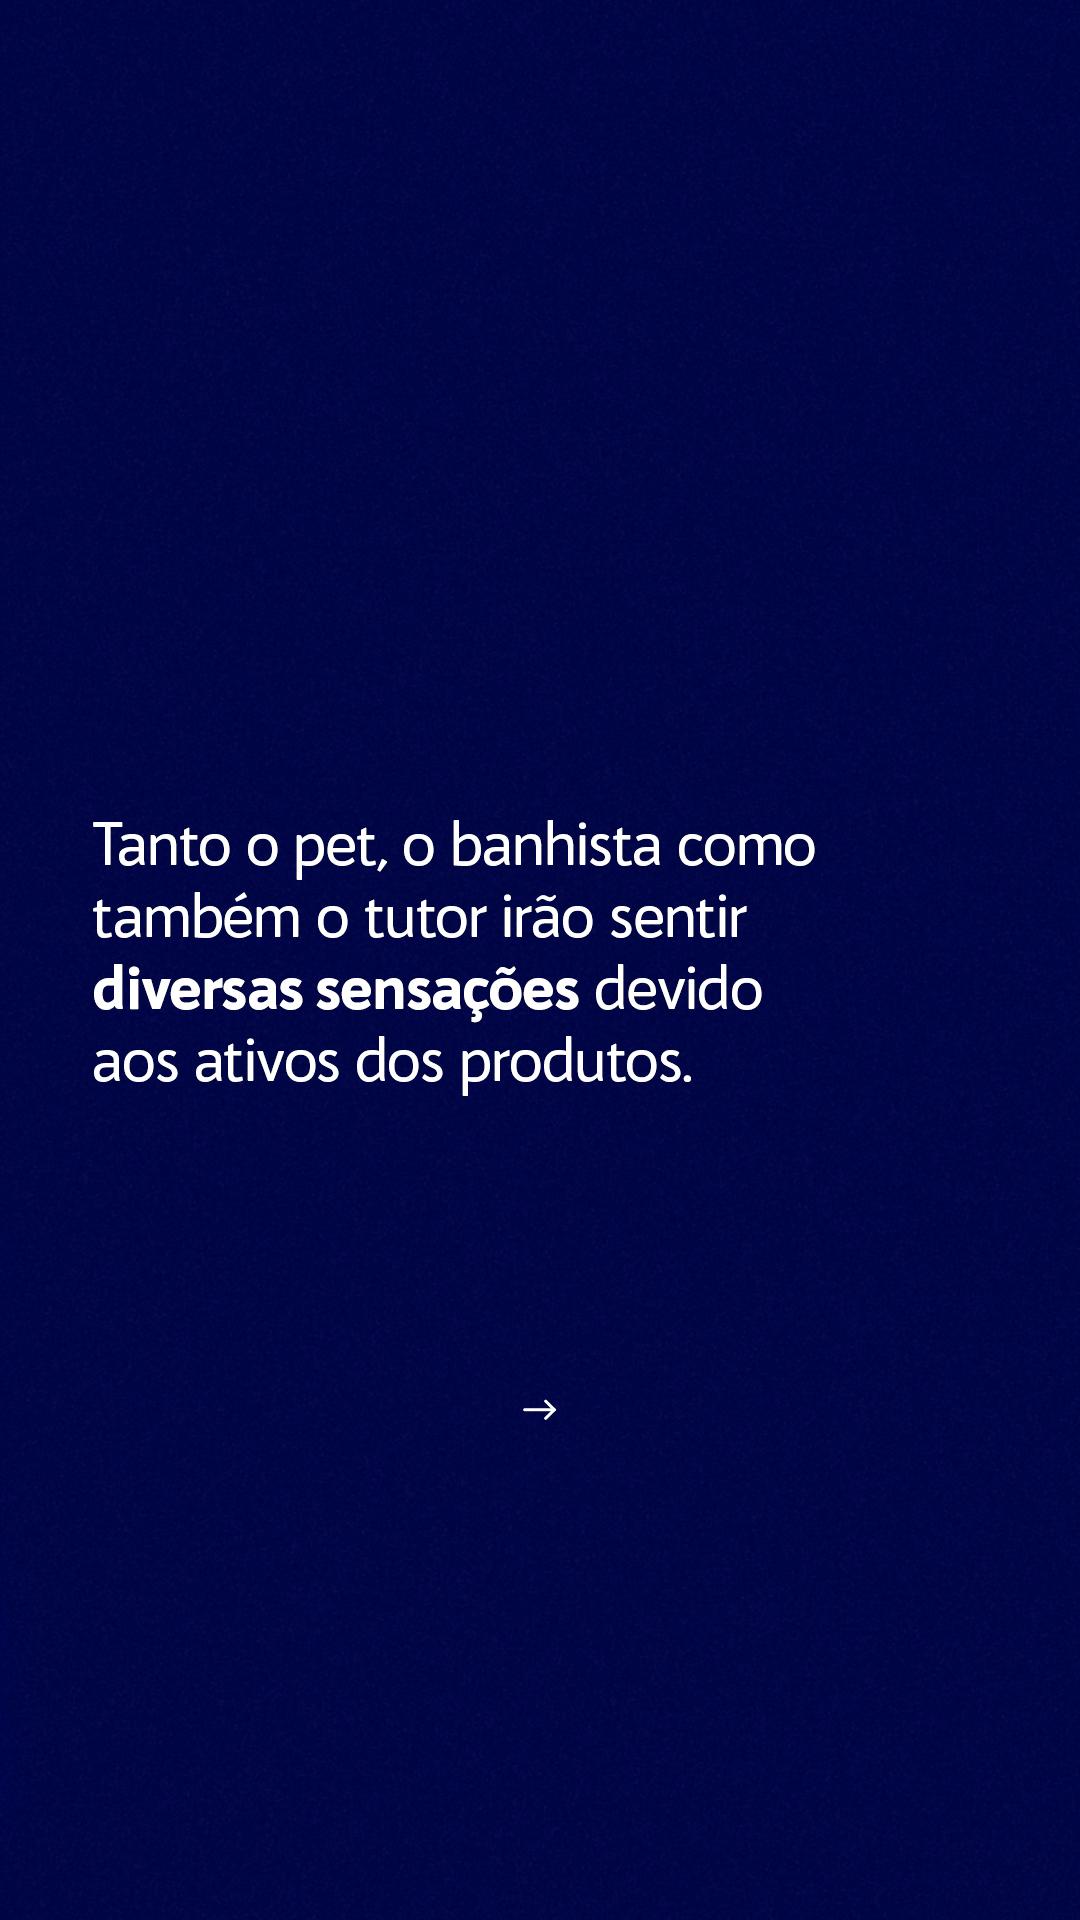 STORIES - BANHO SENSORIAL